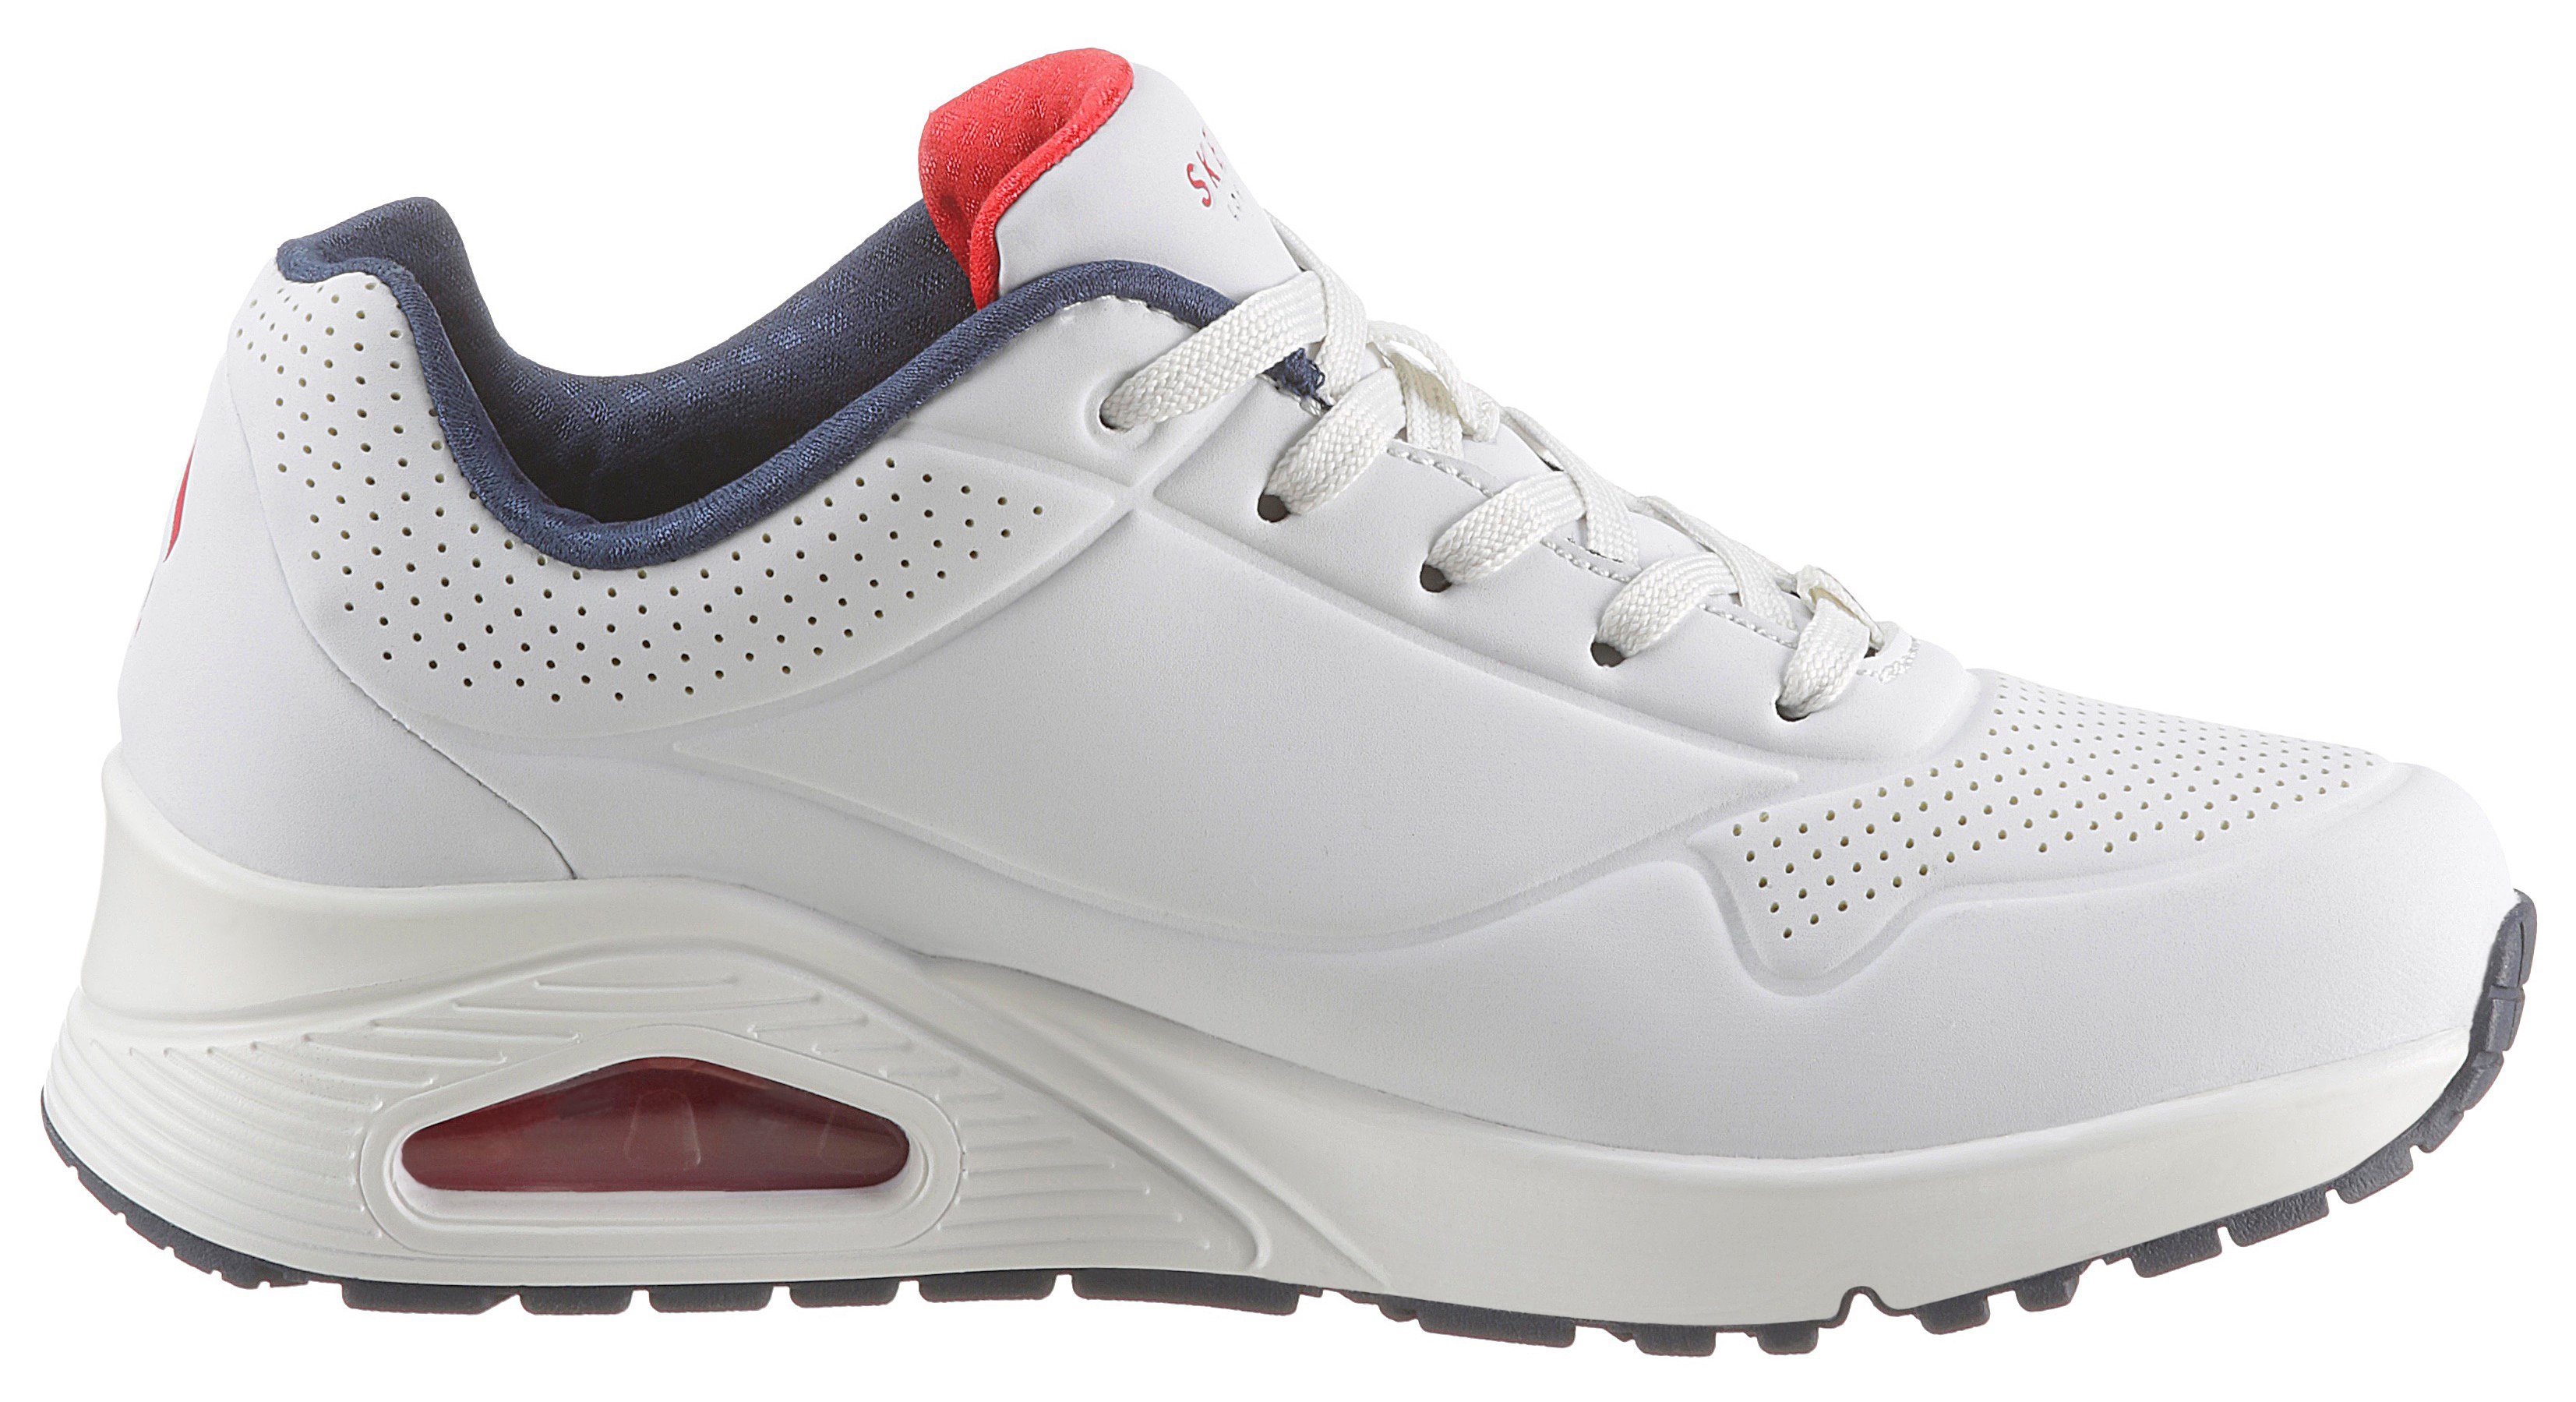 Wedgesneaker Stand Skechers Air Uno mit on Perforation feiner - white